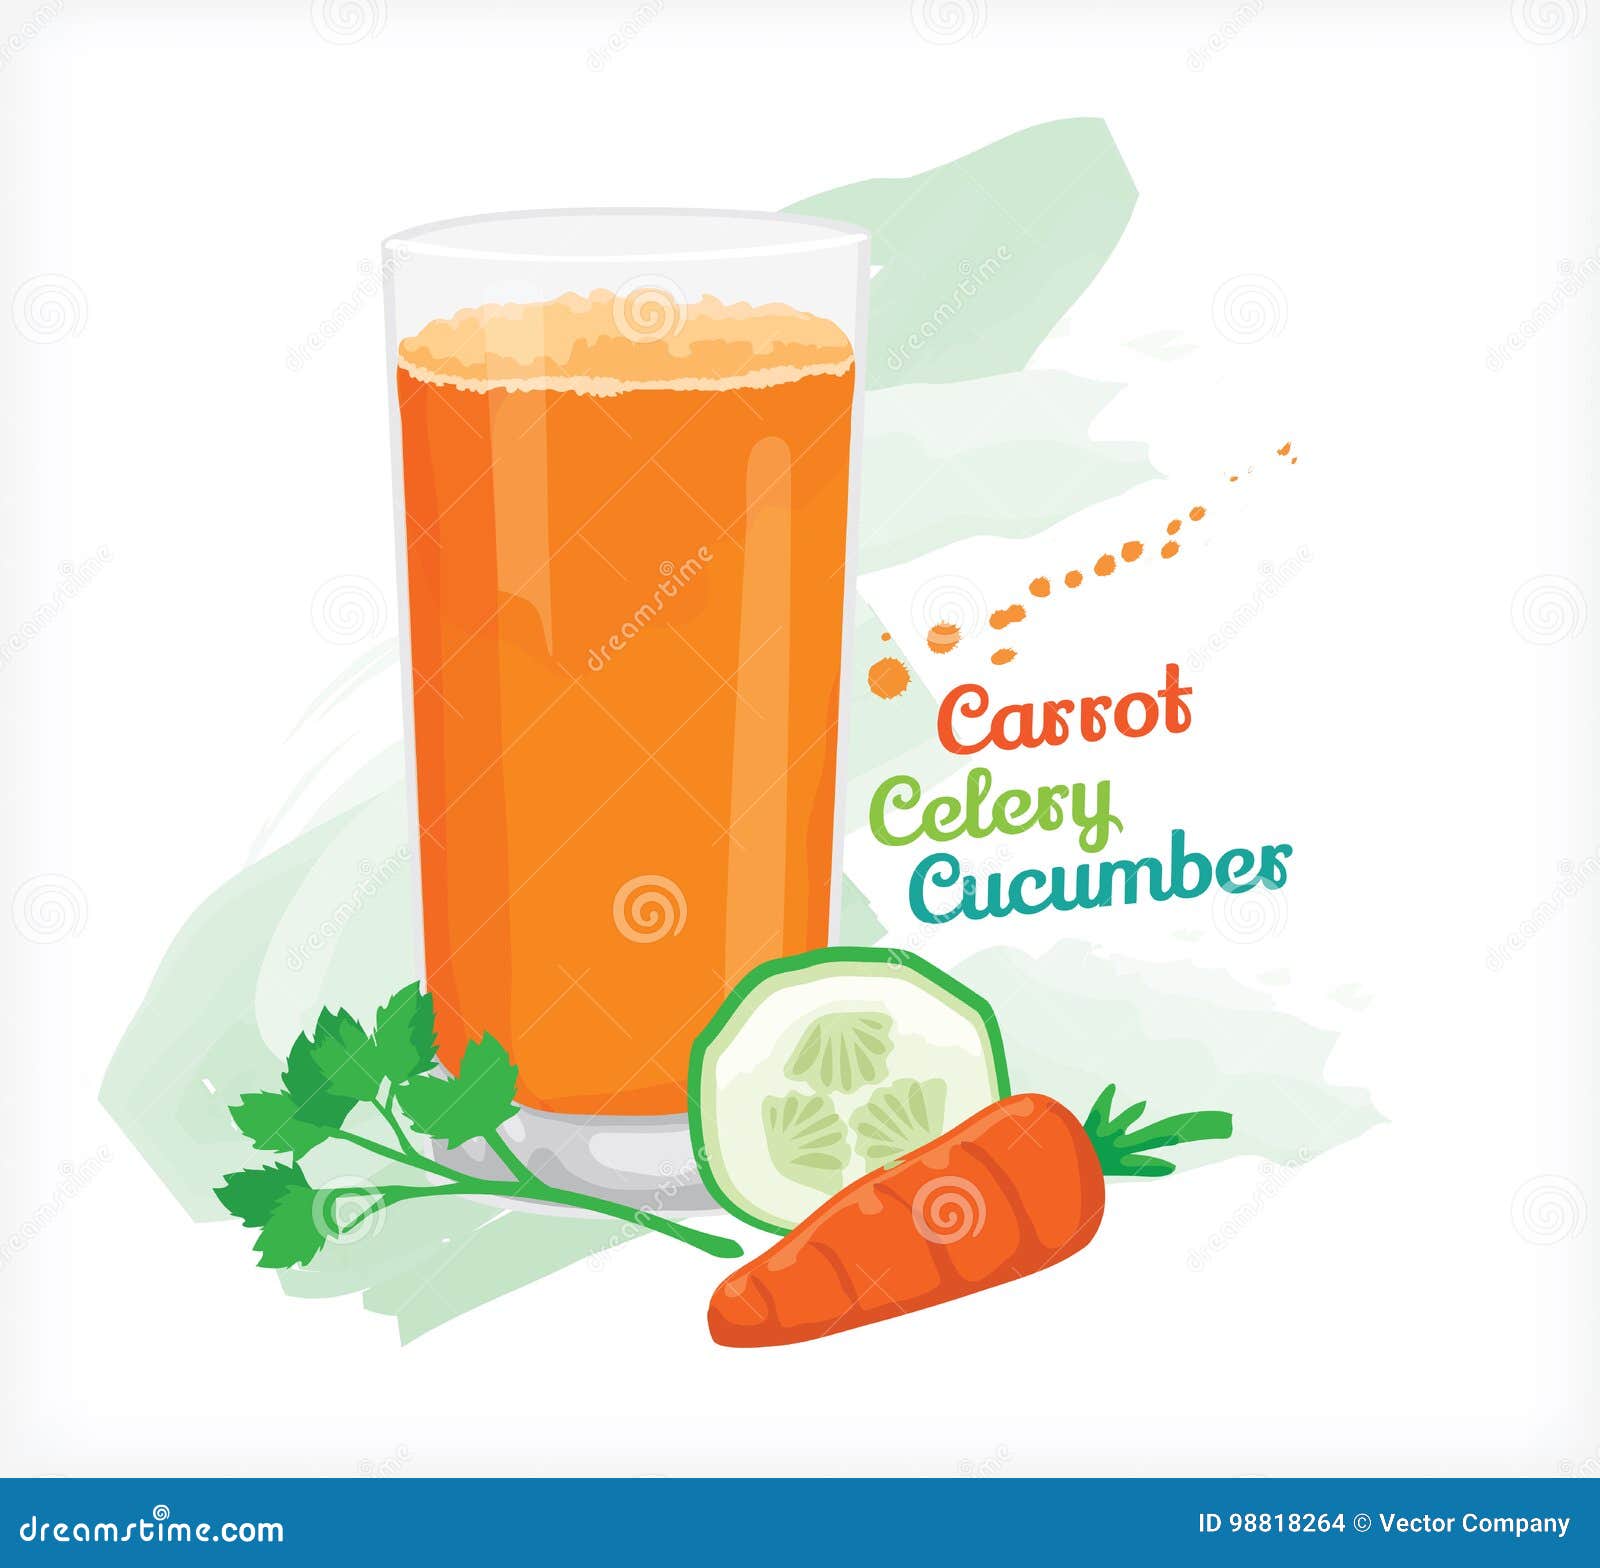 smoothie concombre carotte